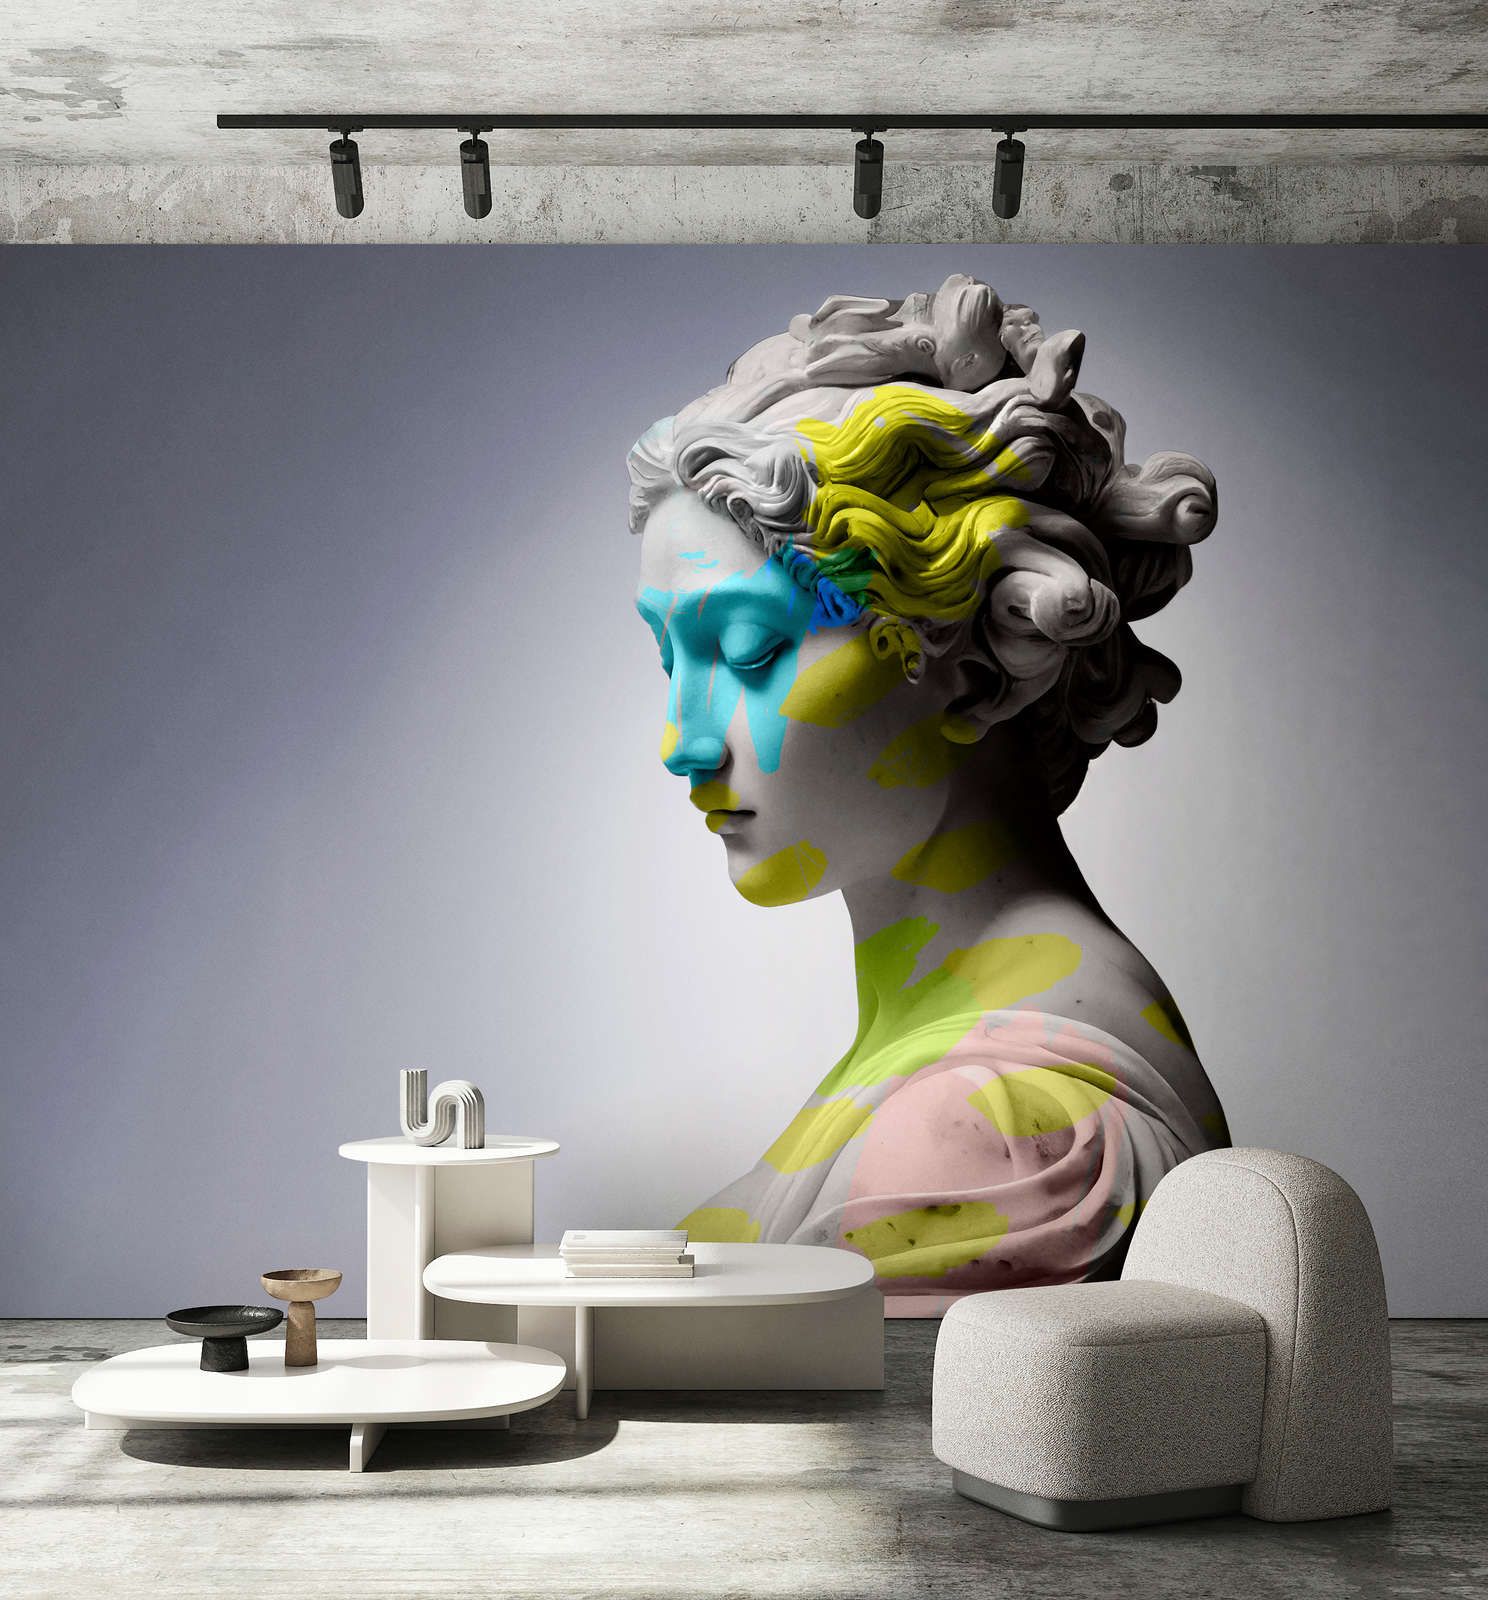             Fotomural »clio« - Escultura femenina con toques de color - Tela no tejida de textura ligera
        